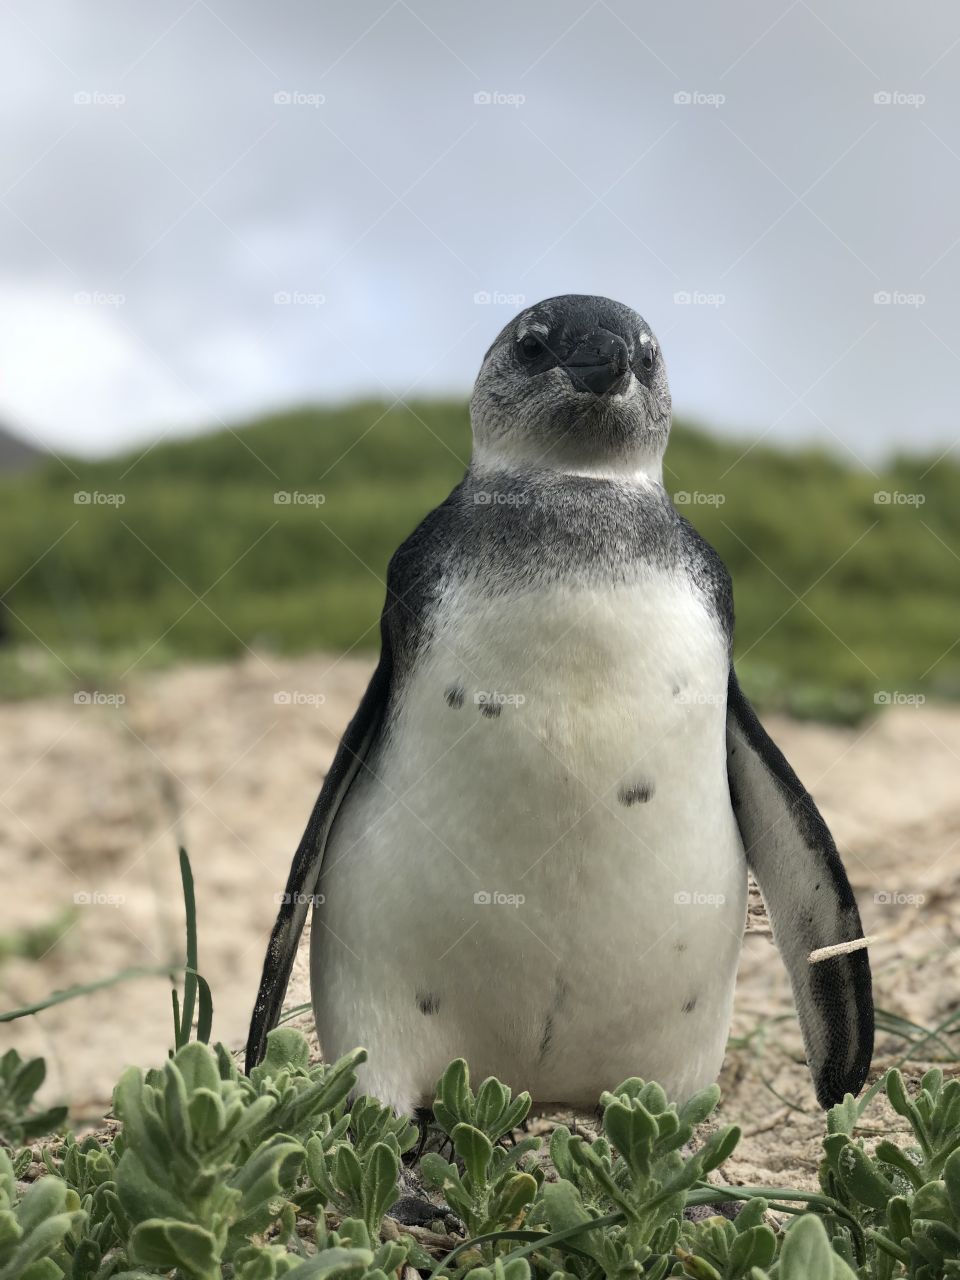 Adorable penguin in Africa